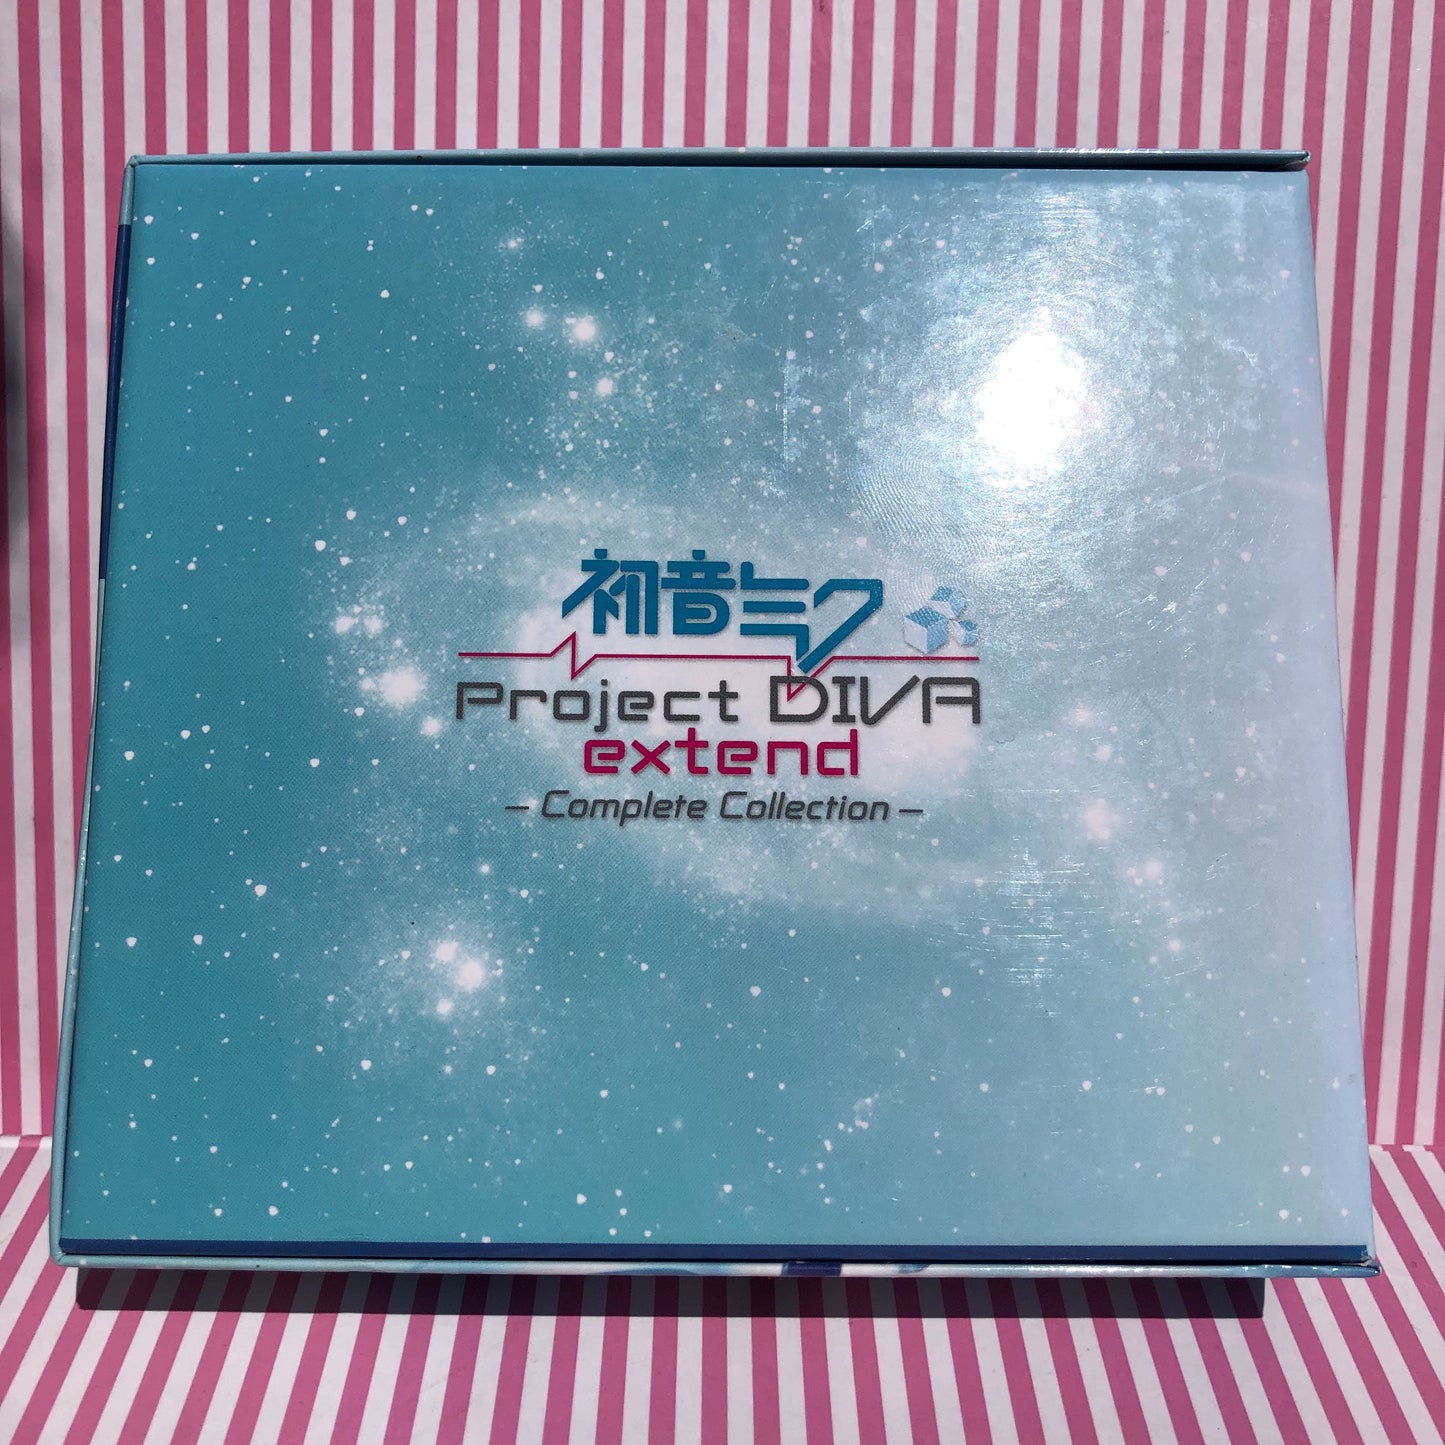 Vocaloid Hatsune Miku Project Diva Extended Complete Collection (2CD + DVD + Calendar)